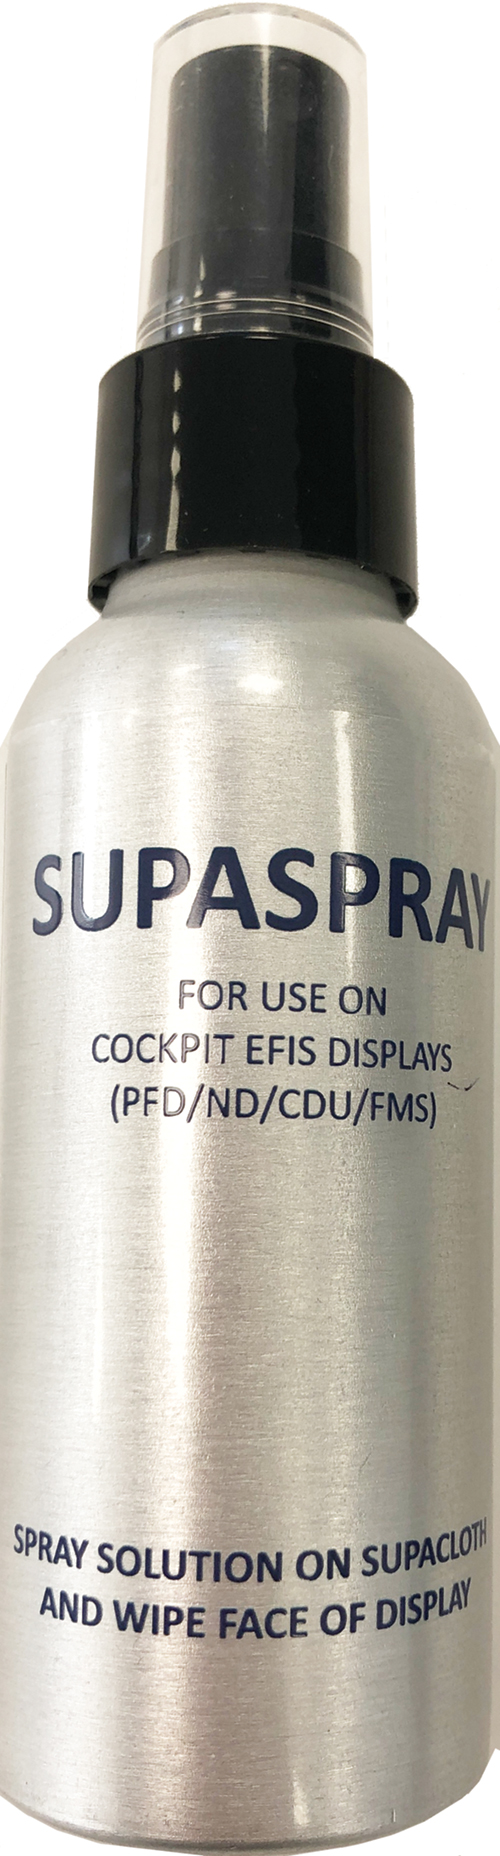 SupaSpray for use on Cockpit EFIS Displays (PFD/ND/CDU/FMS)Image Id:166267